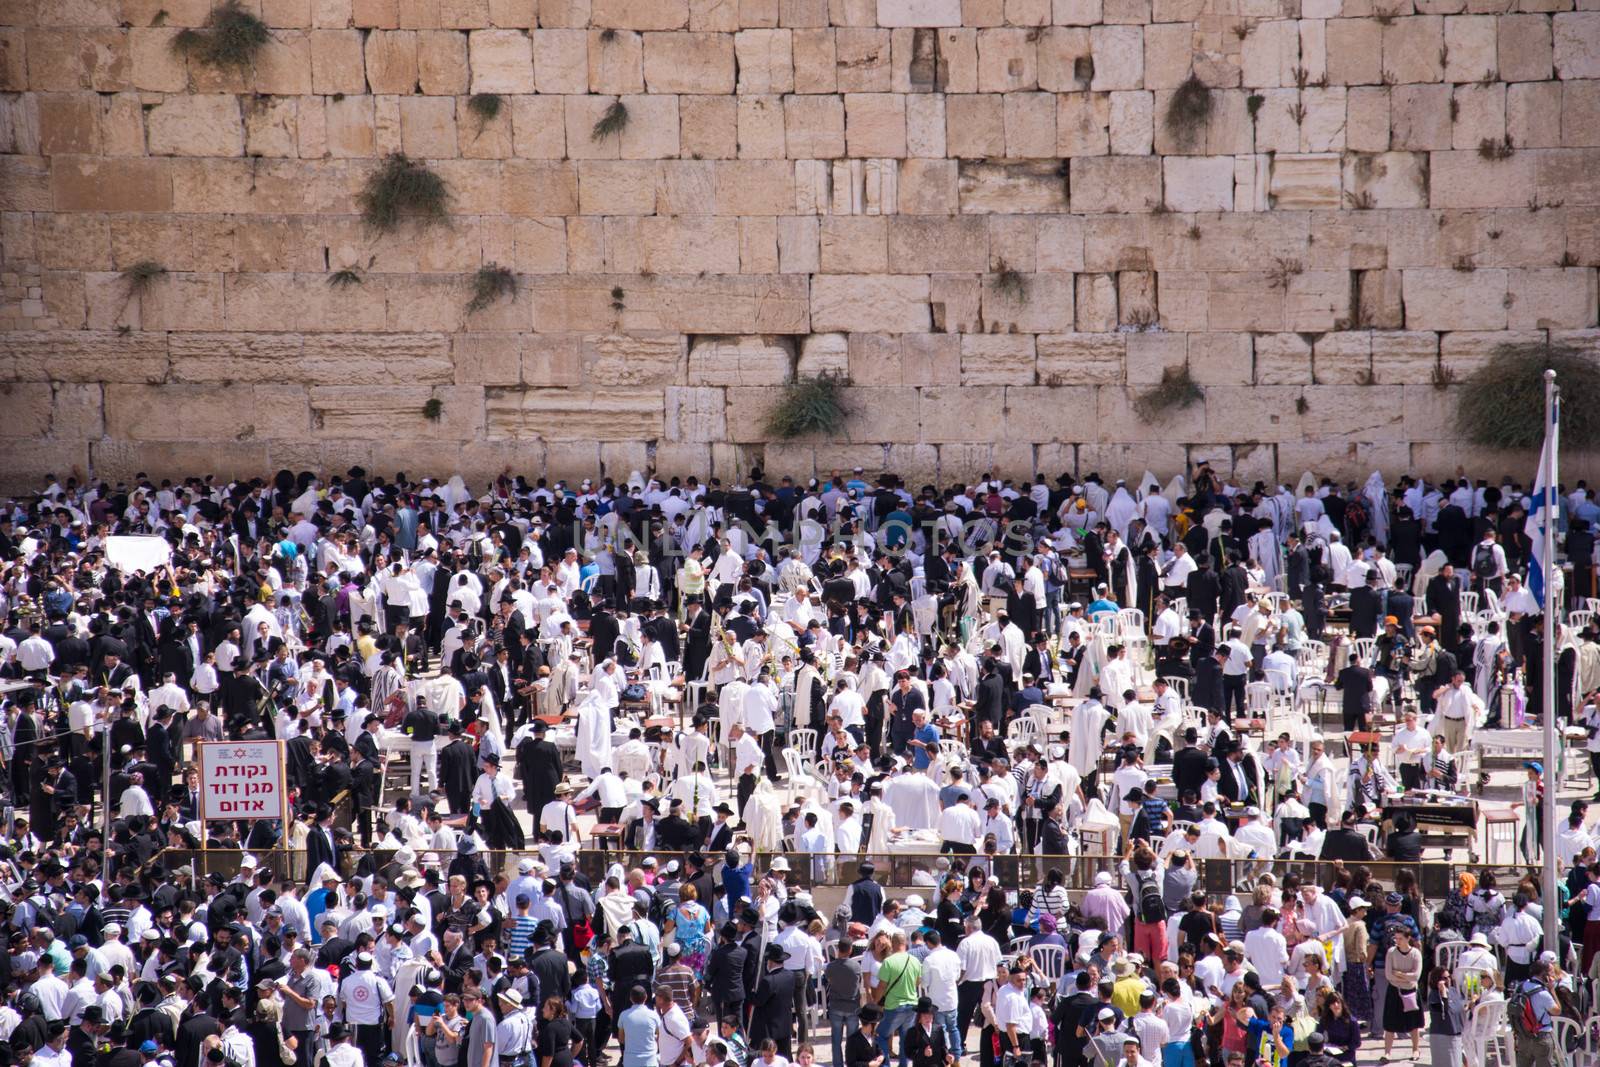 People at the Wailing Wall ,Jerusalem